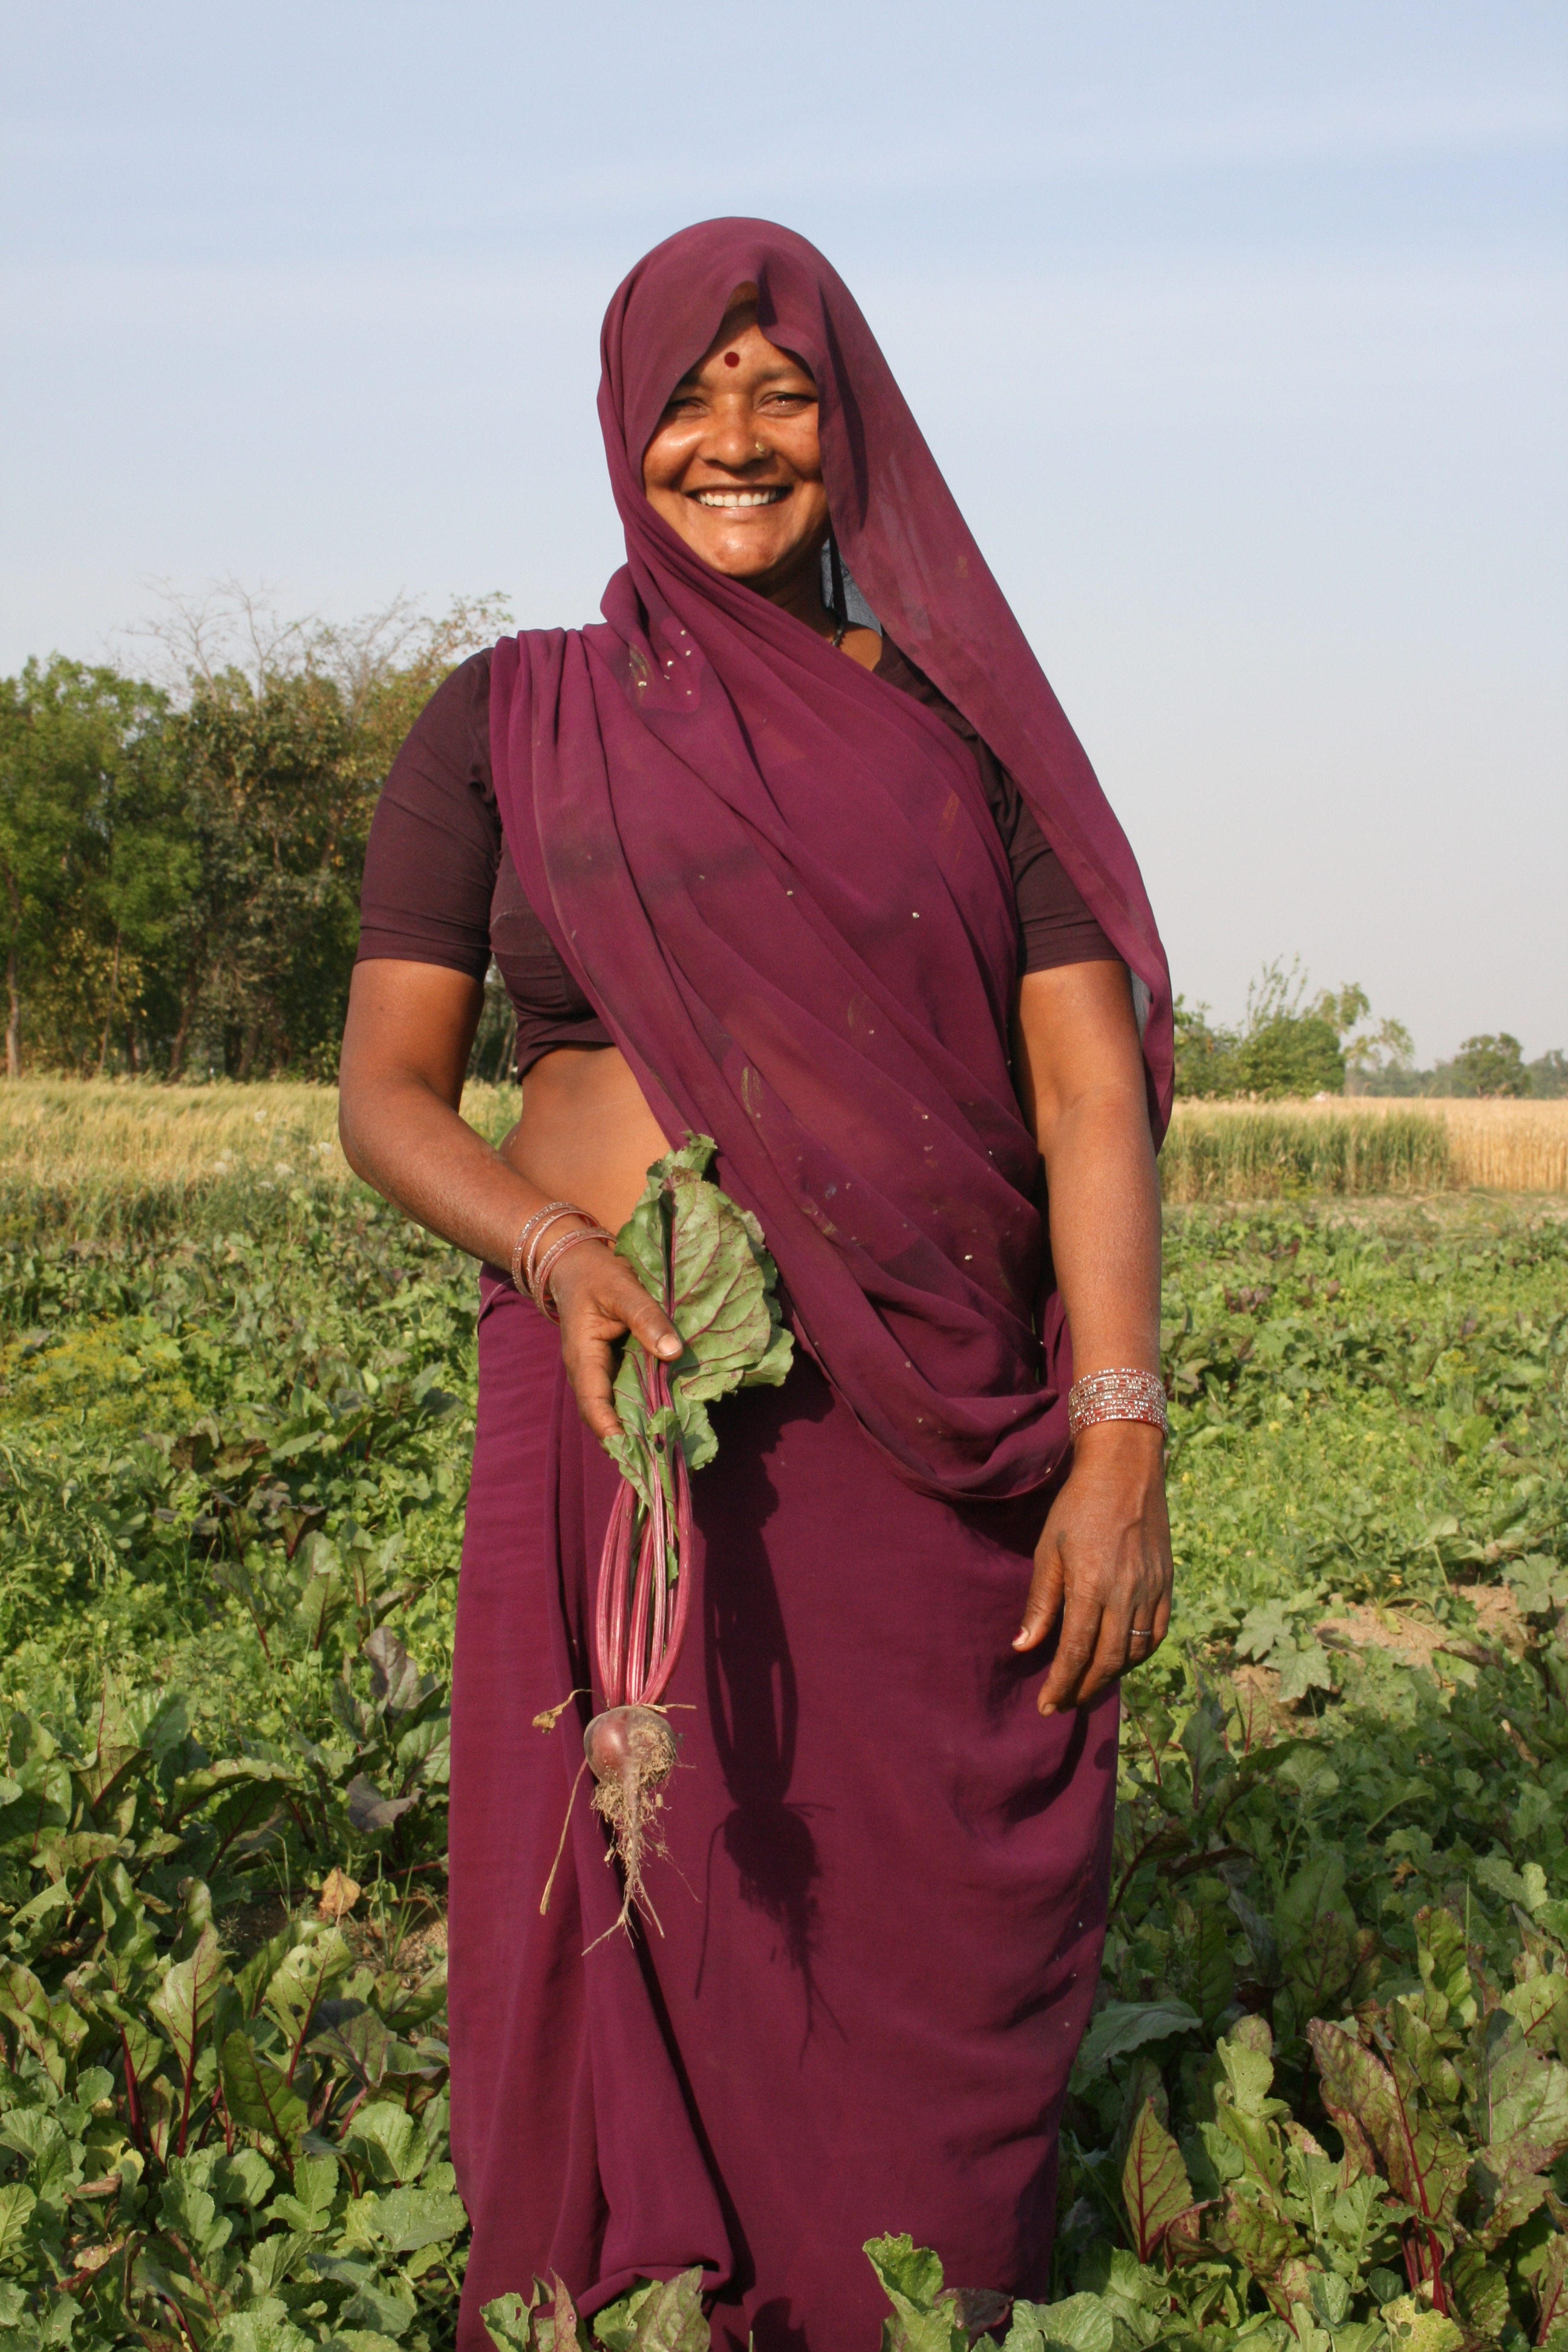 International Day of Rural Women « Find Your Feet's Blog